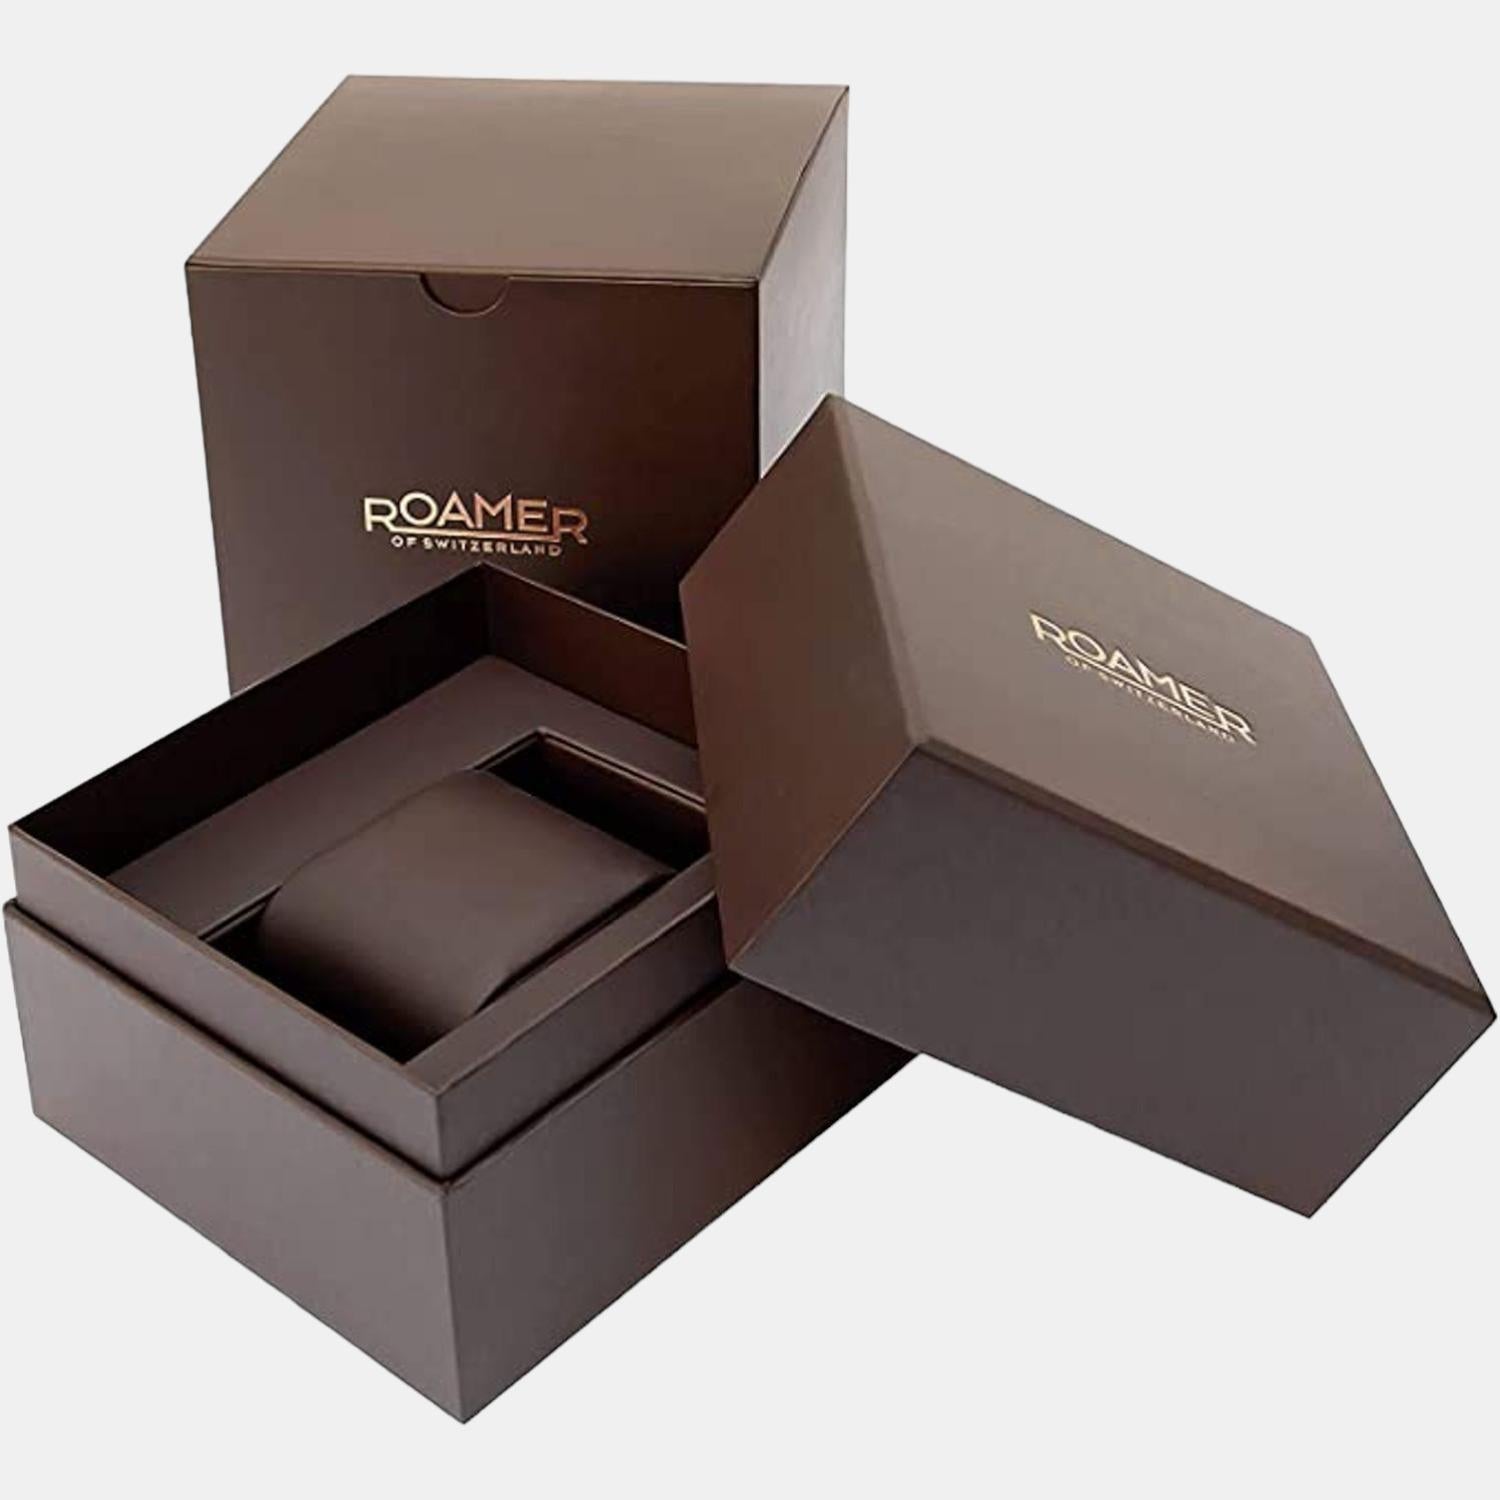 roamer-ceramic-cream-analog-male-watch-658833-48-35-61